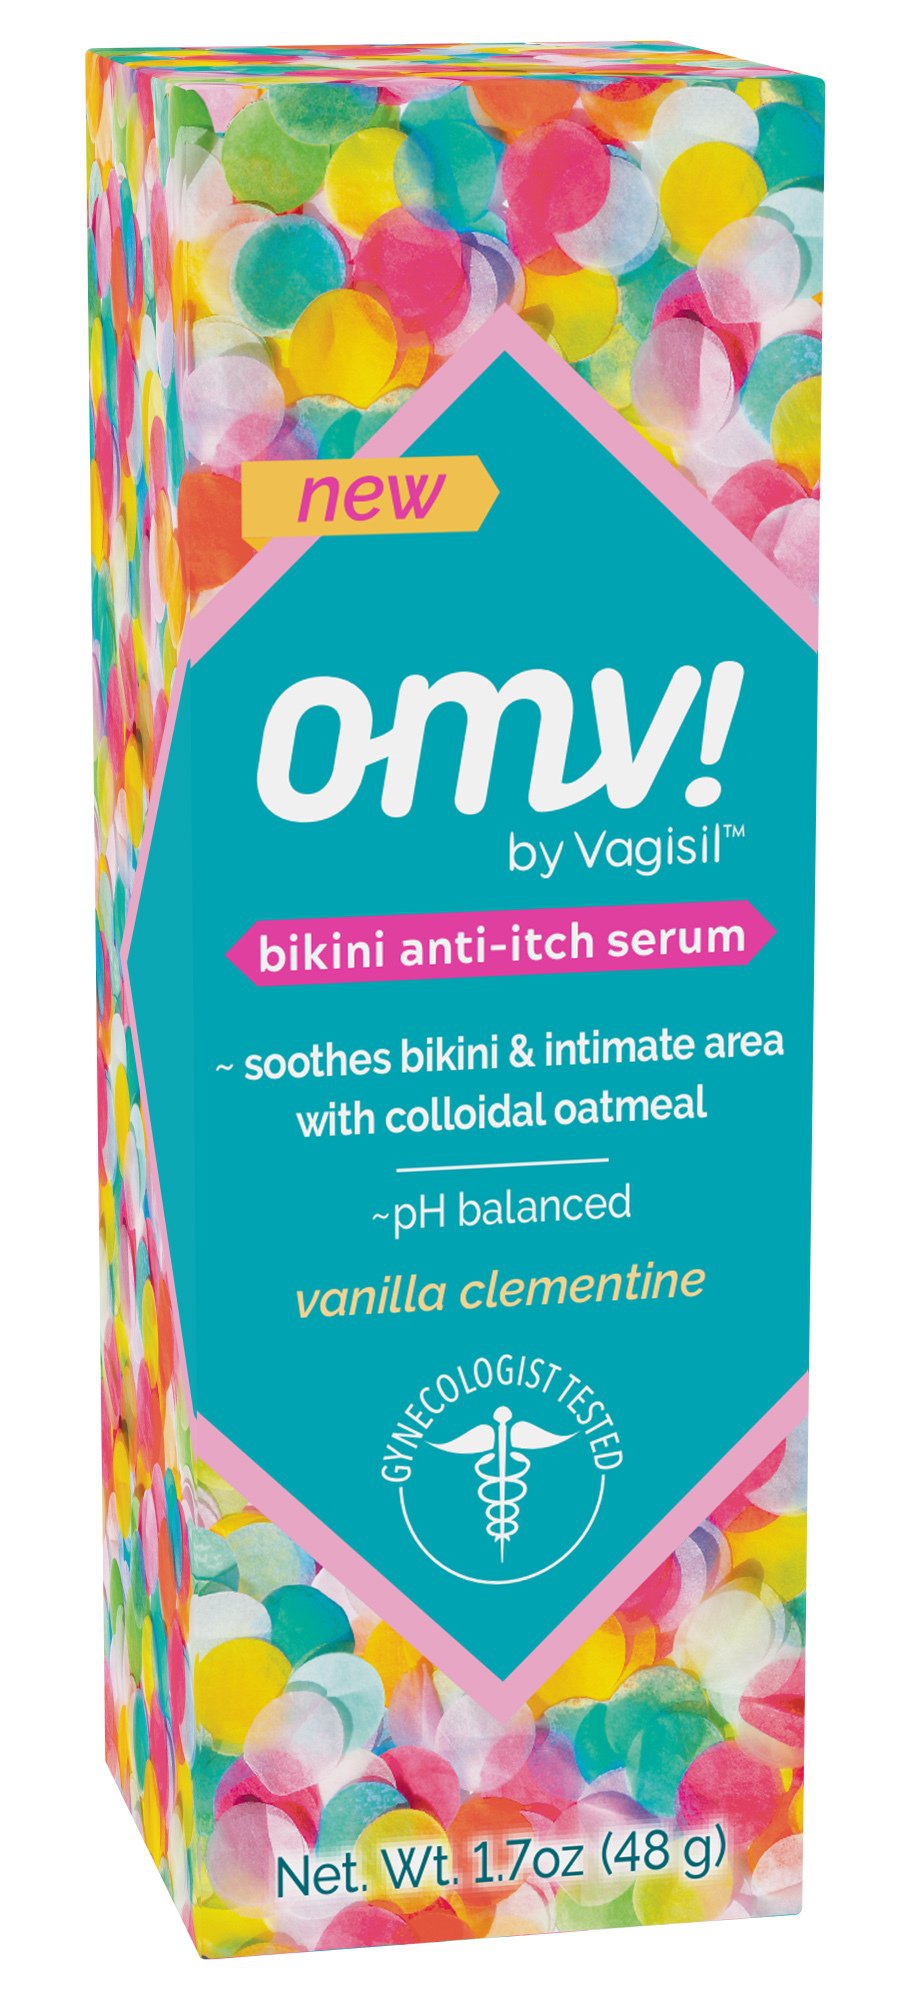 Vagisil Omv! By Vagisil Bikini Anti-Itch Serum